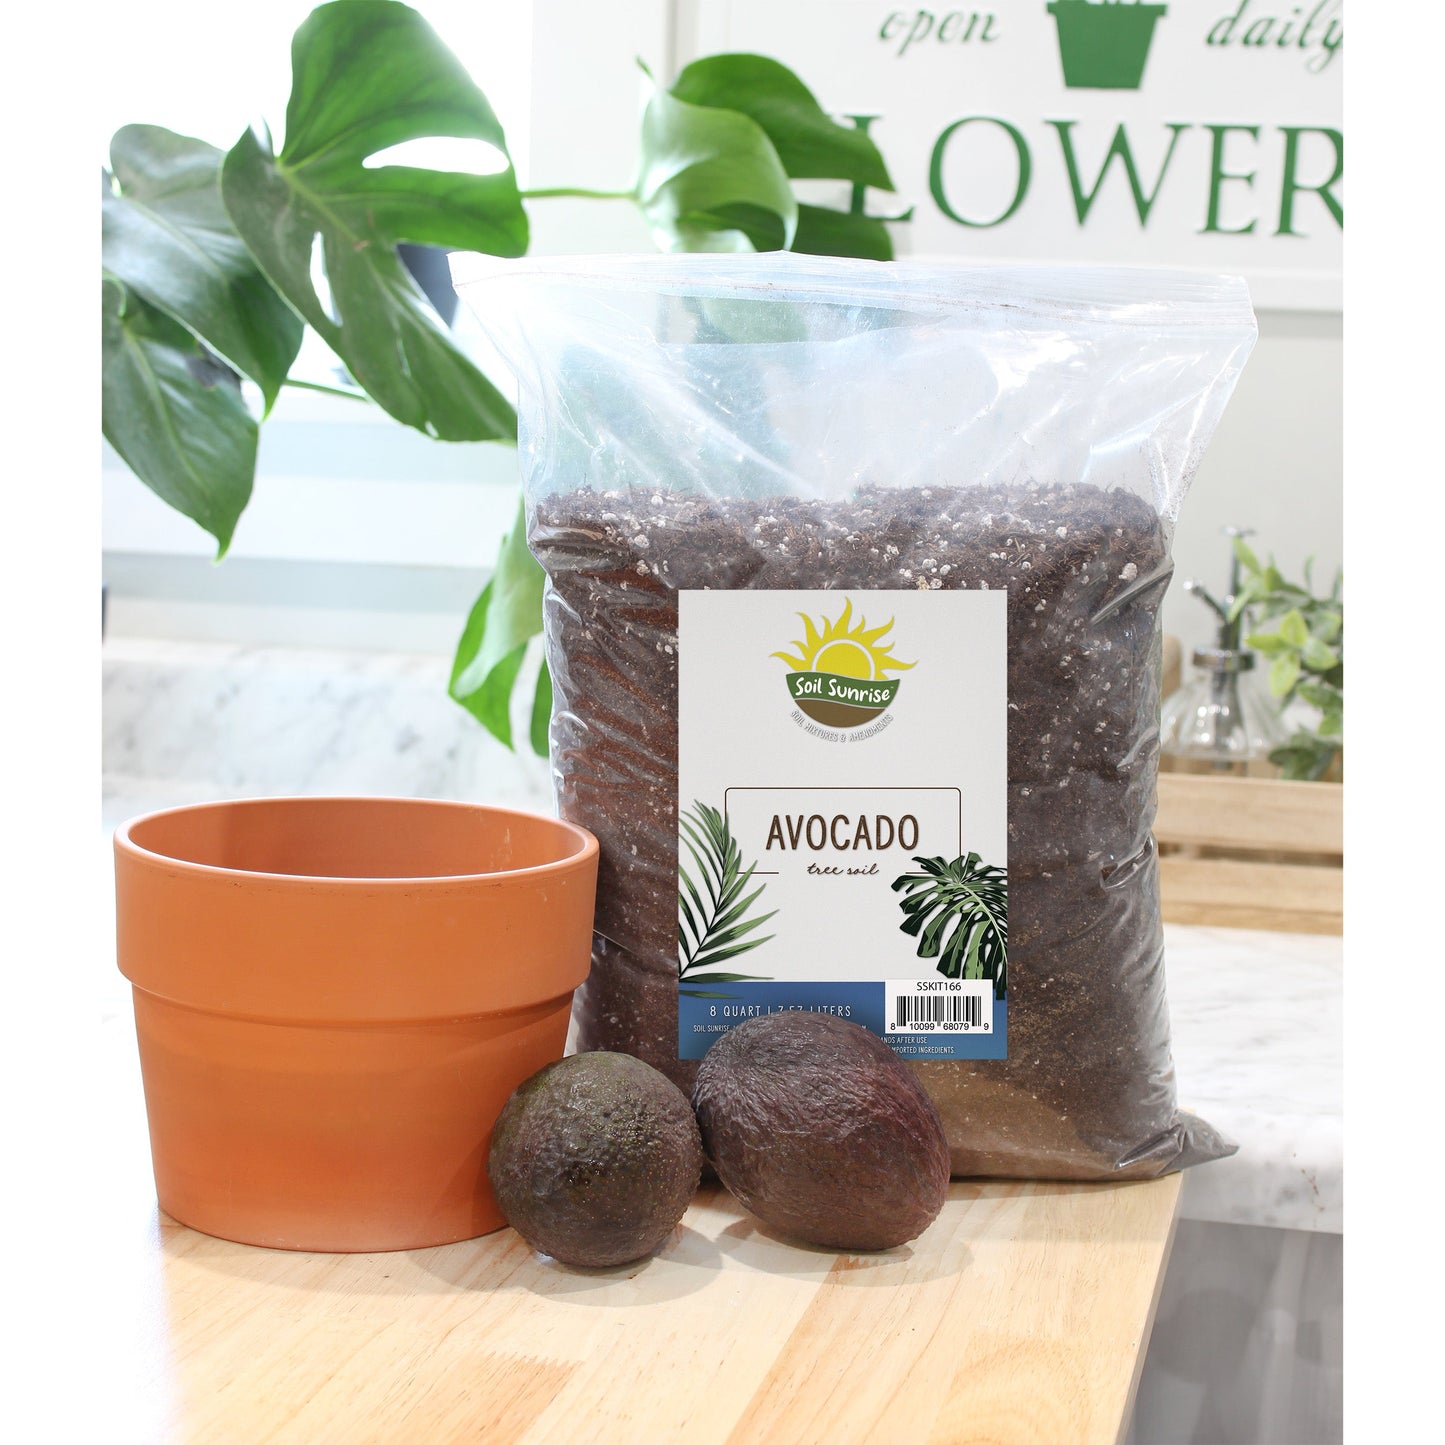 Avocado Tree Potting Soil Mix (12 Quarts) - SSKIT208